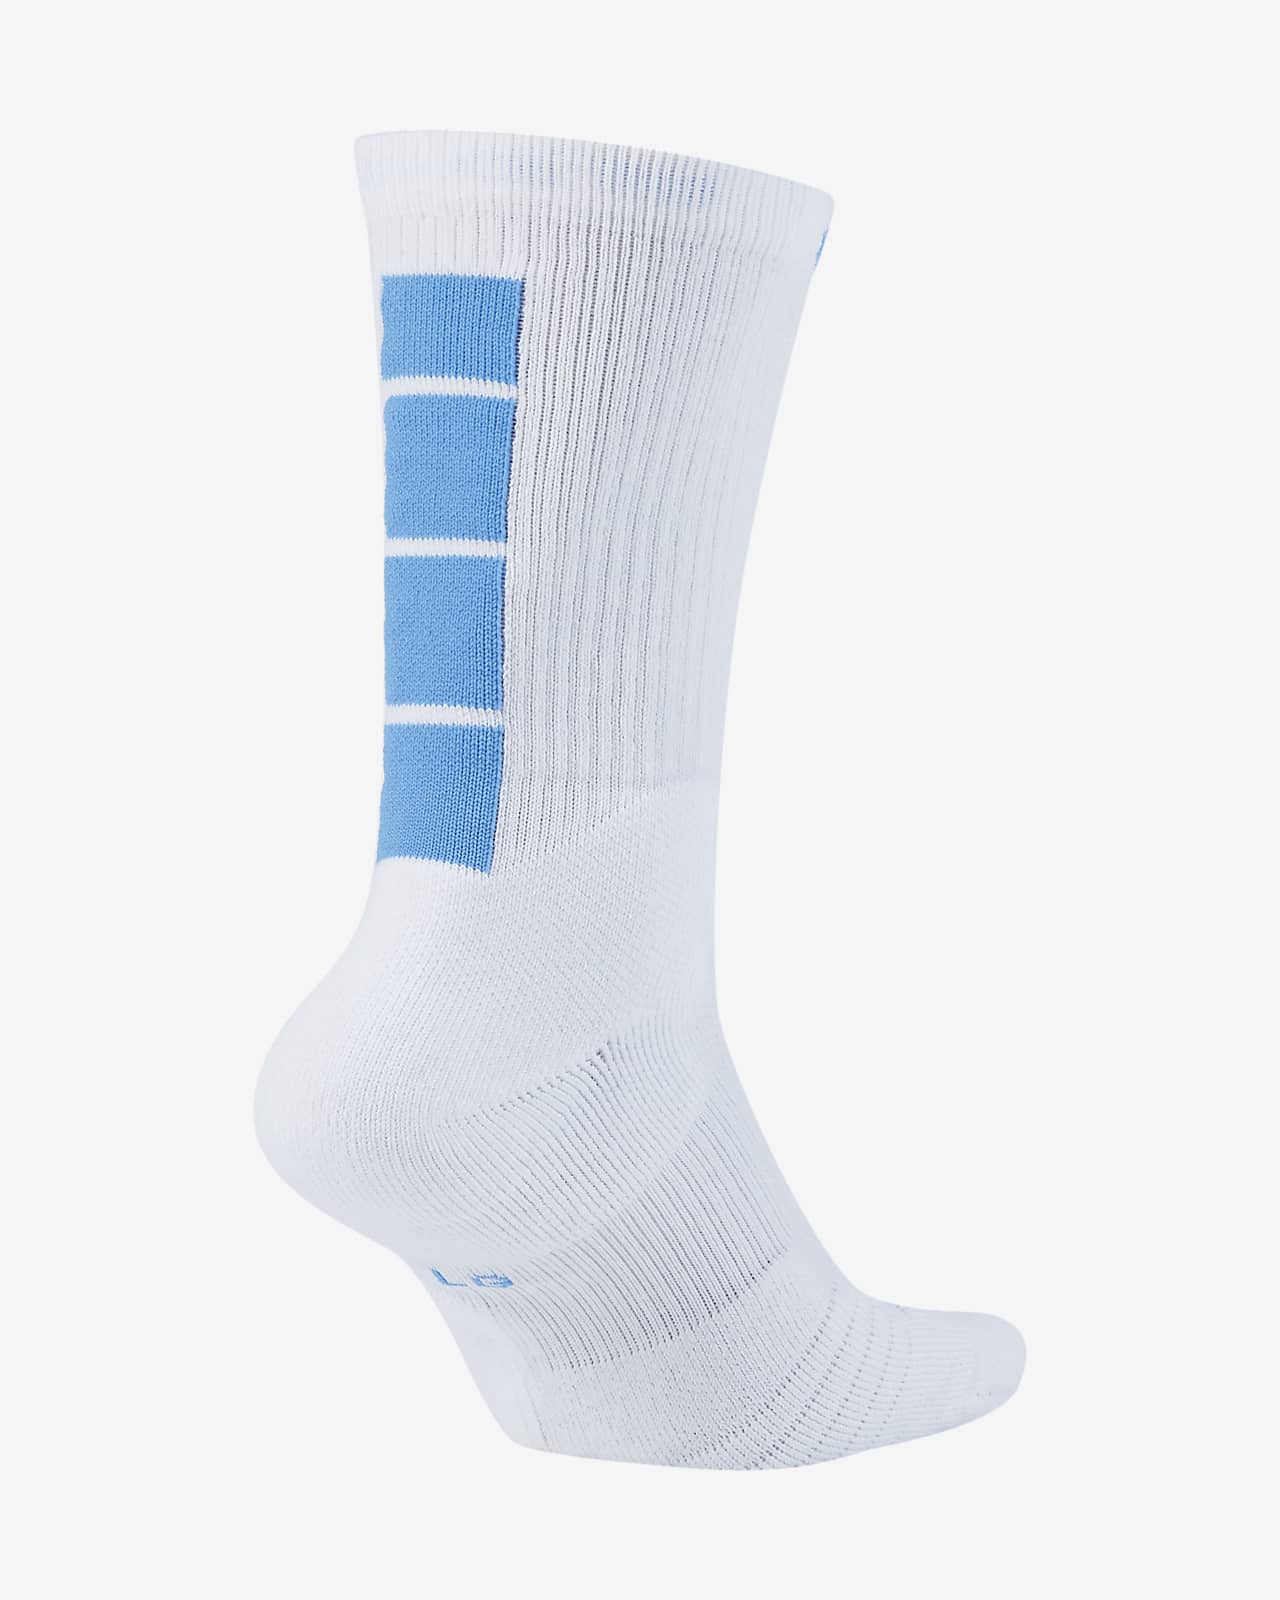 nike city edition socks